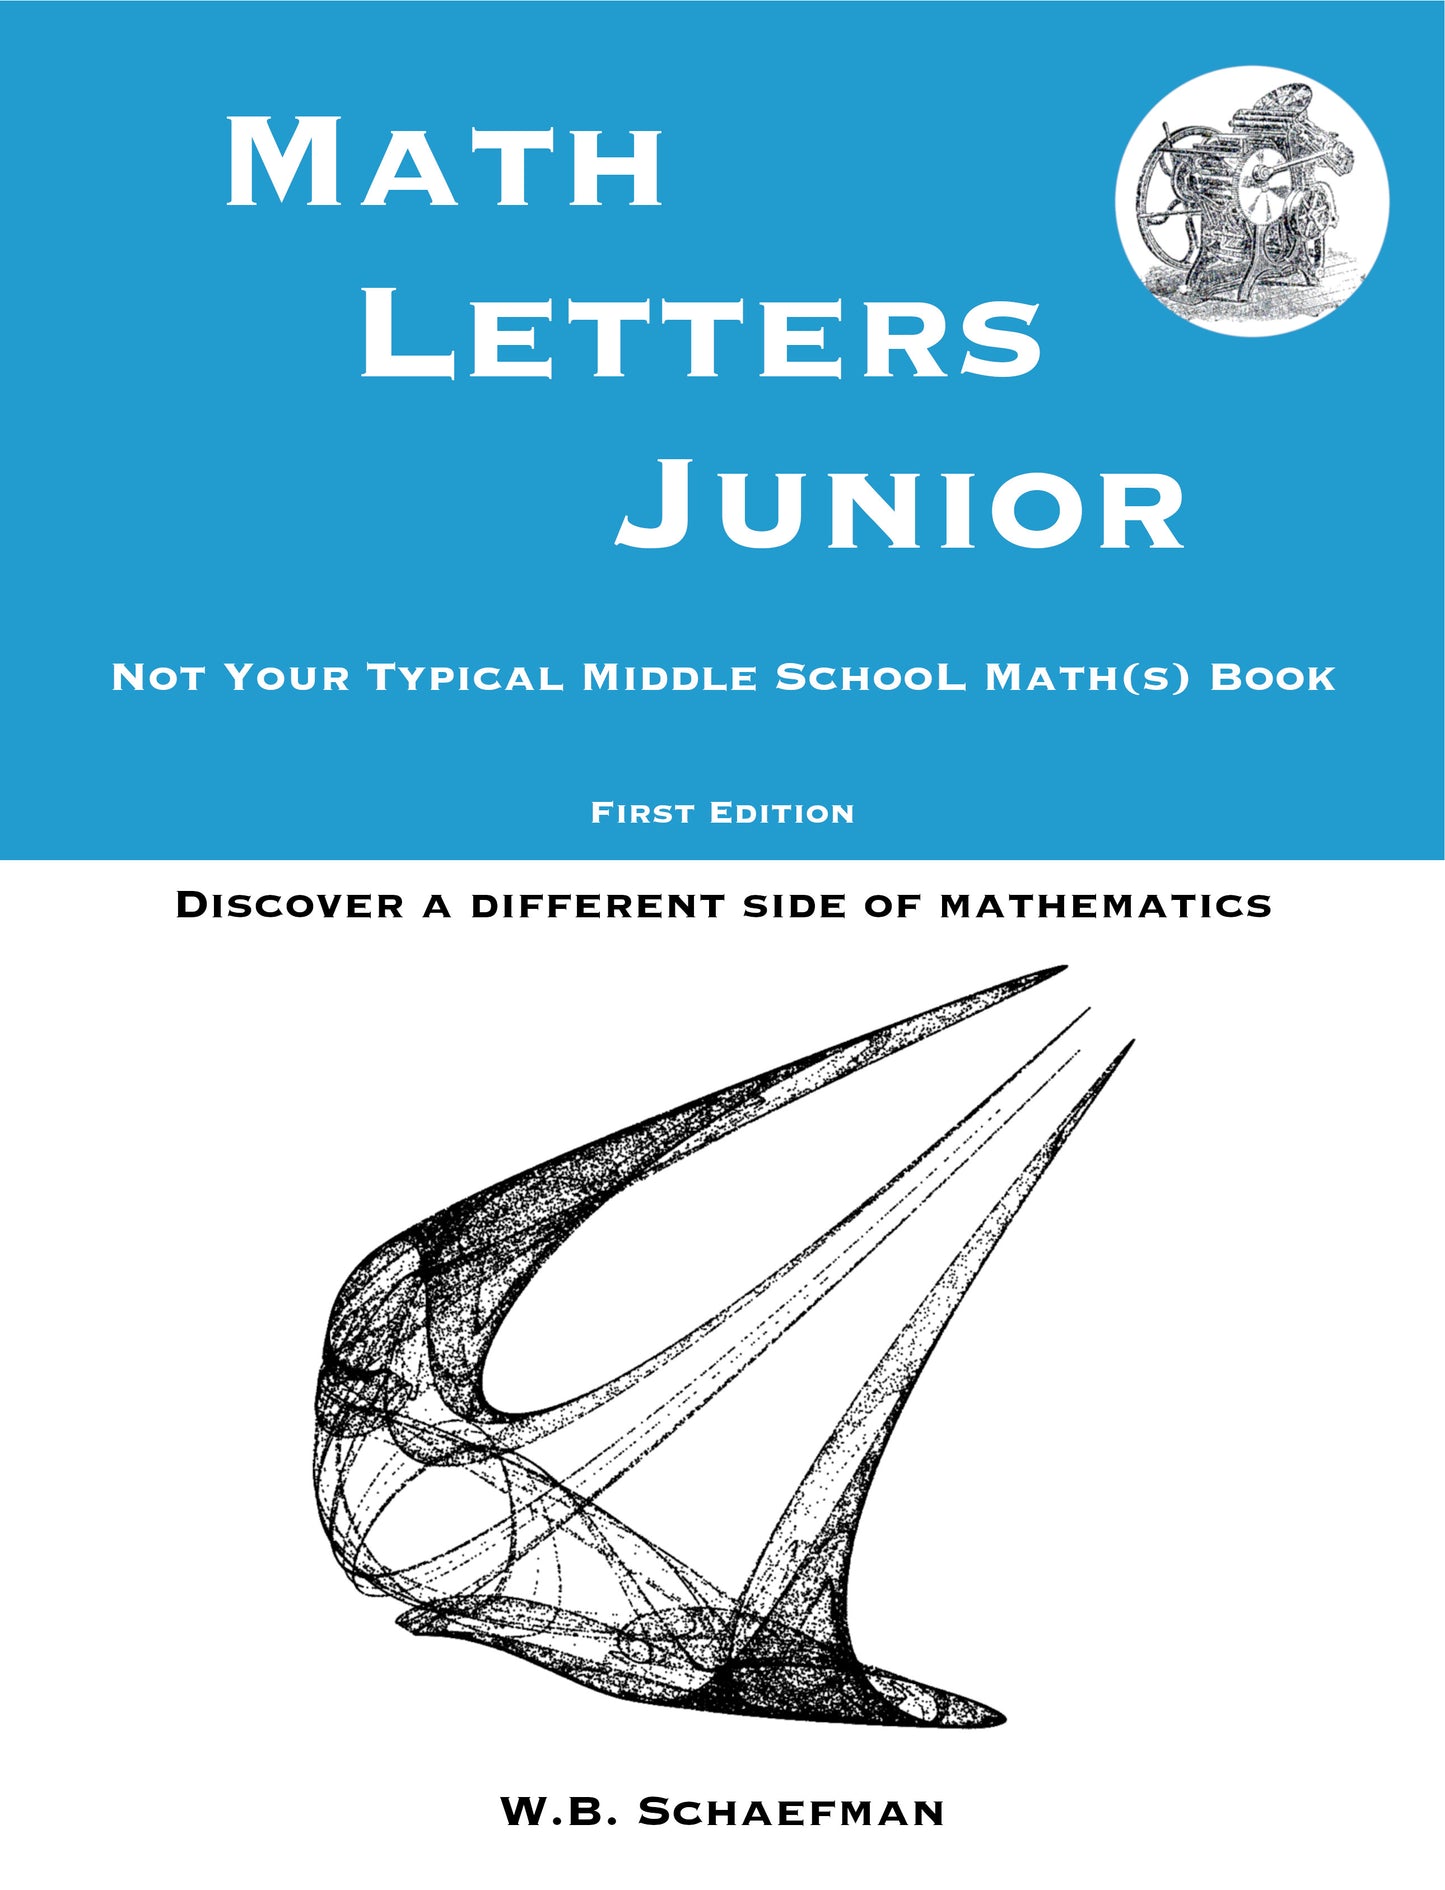 Math Letters Jr. PDF Book (digital download)